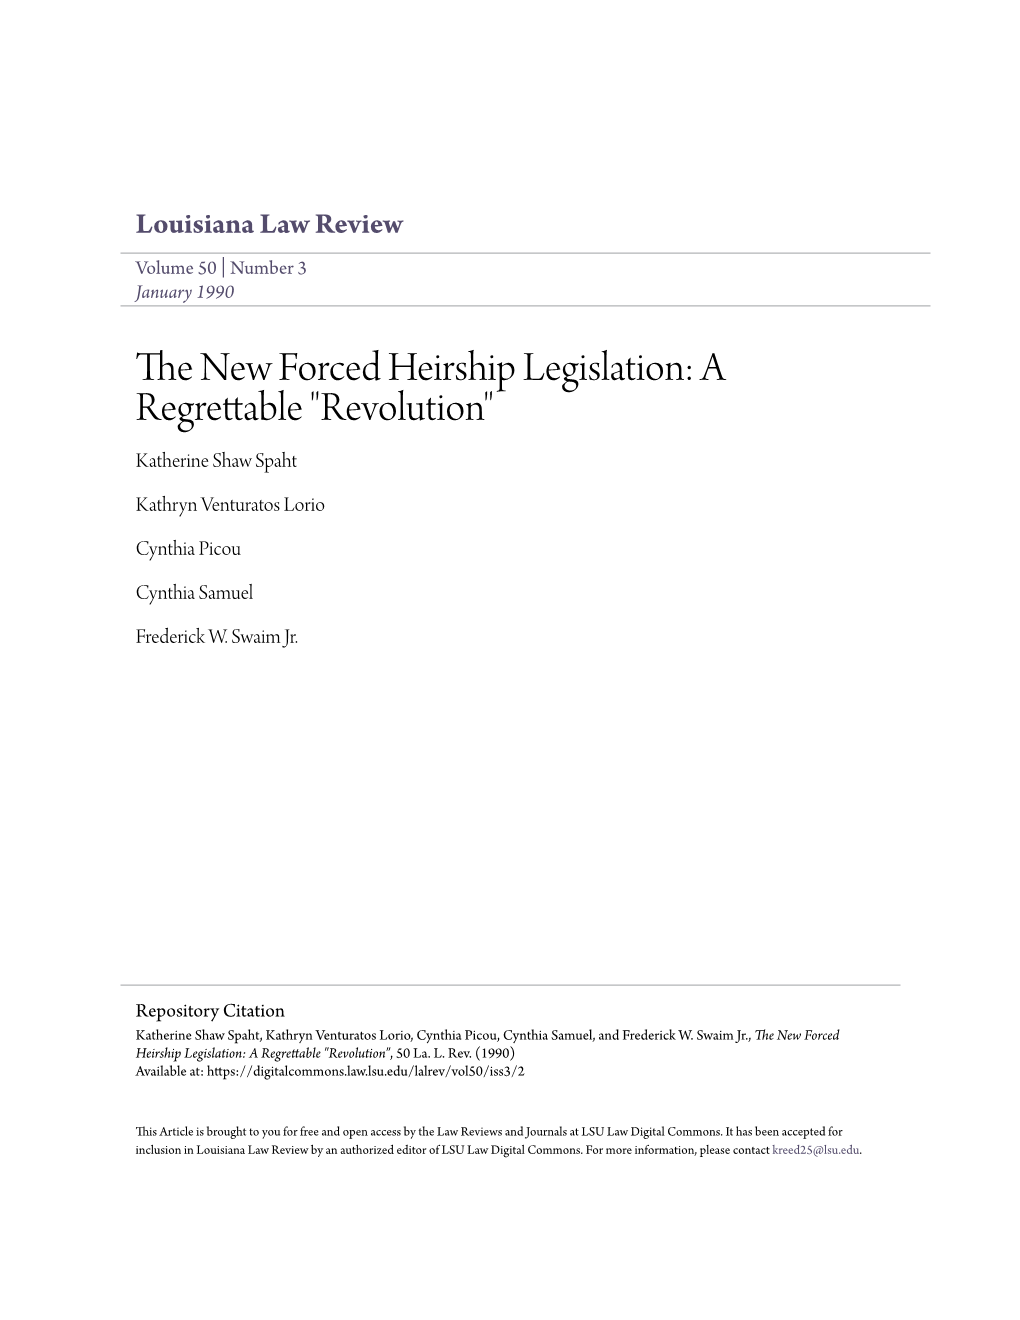 The New Forced Heirship Legislation: a Regrettable "Revolution", 50 La